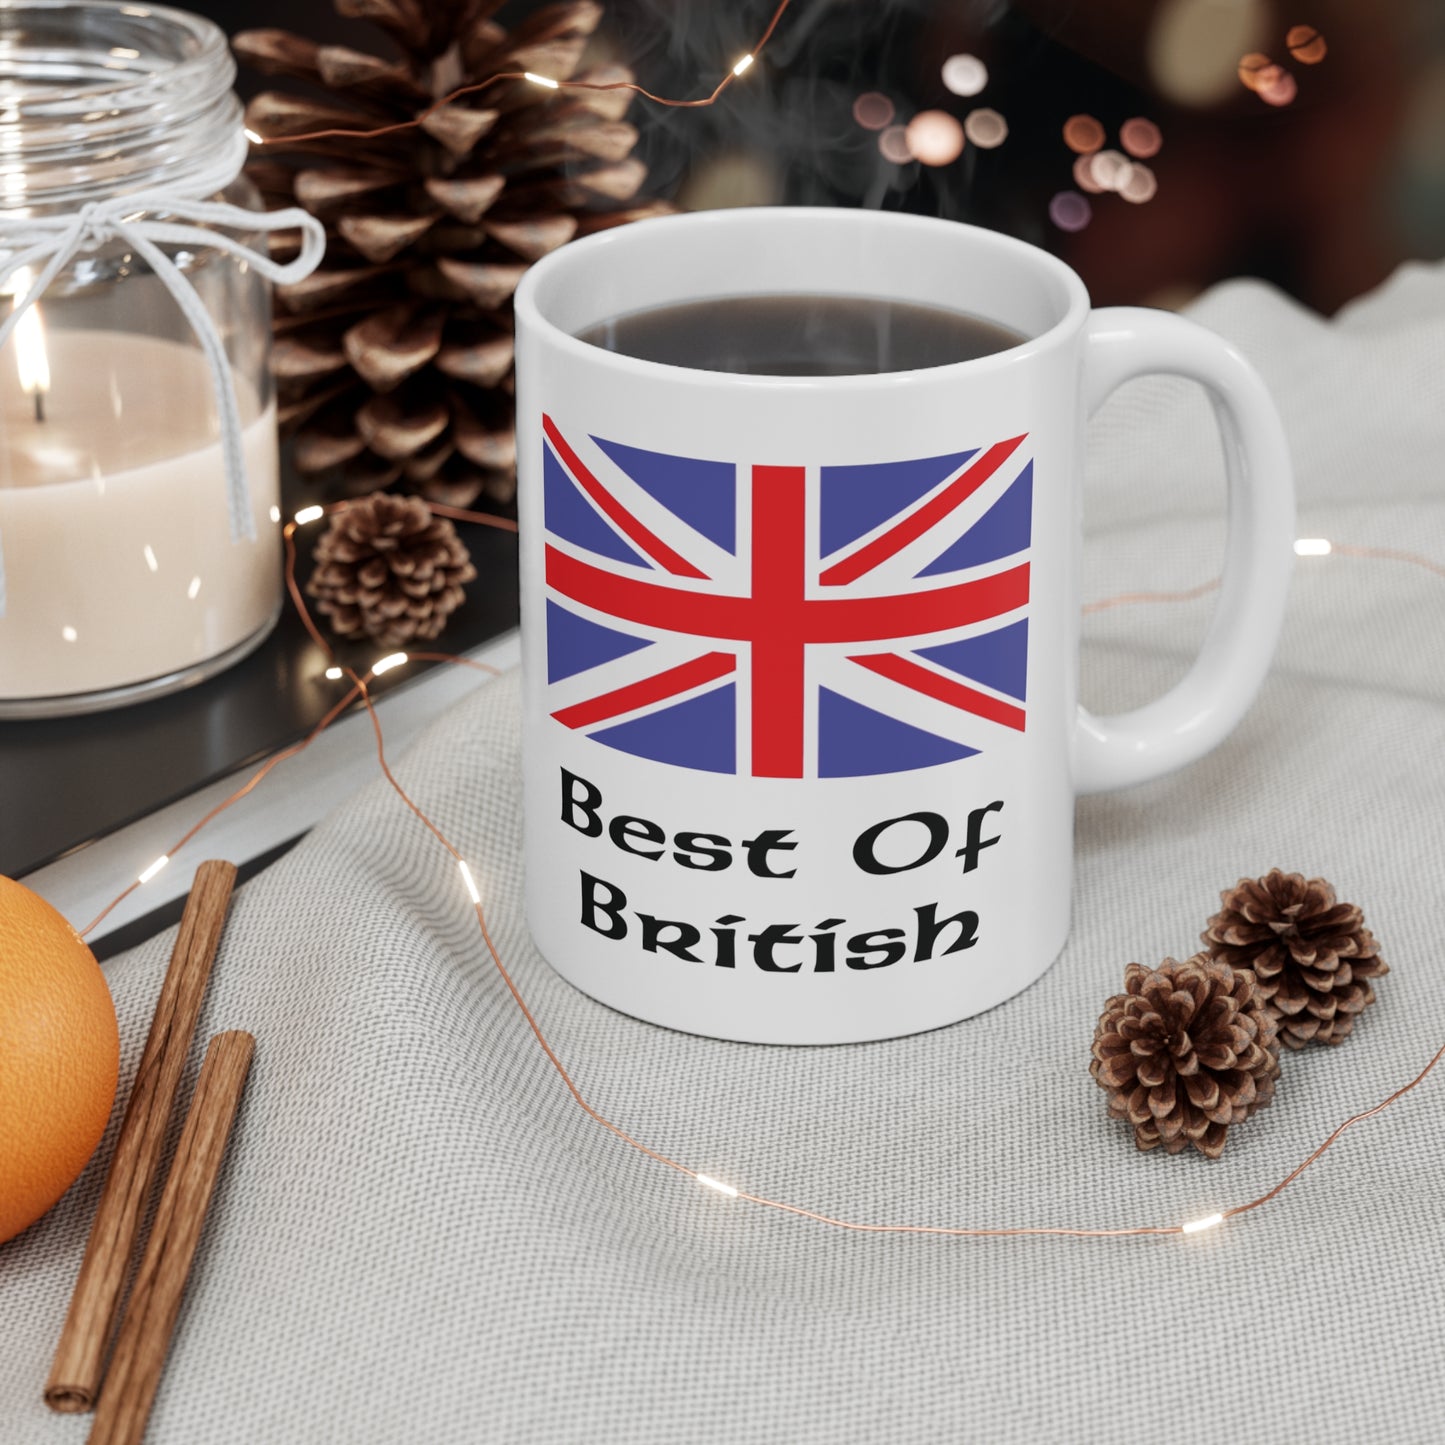 Best of British Union Jack Flag Coffee Mug